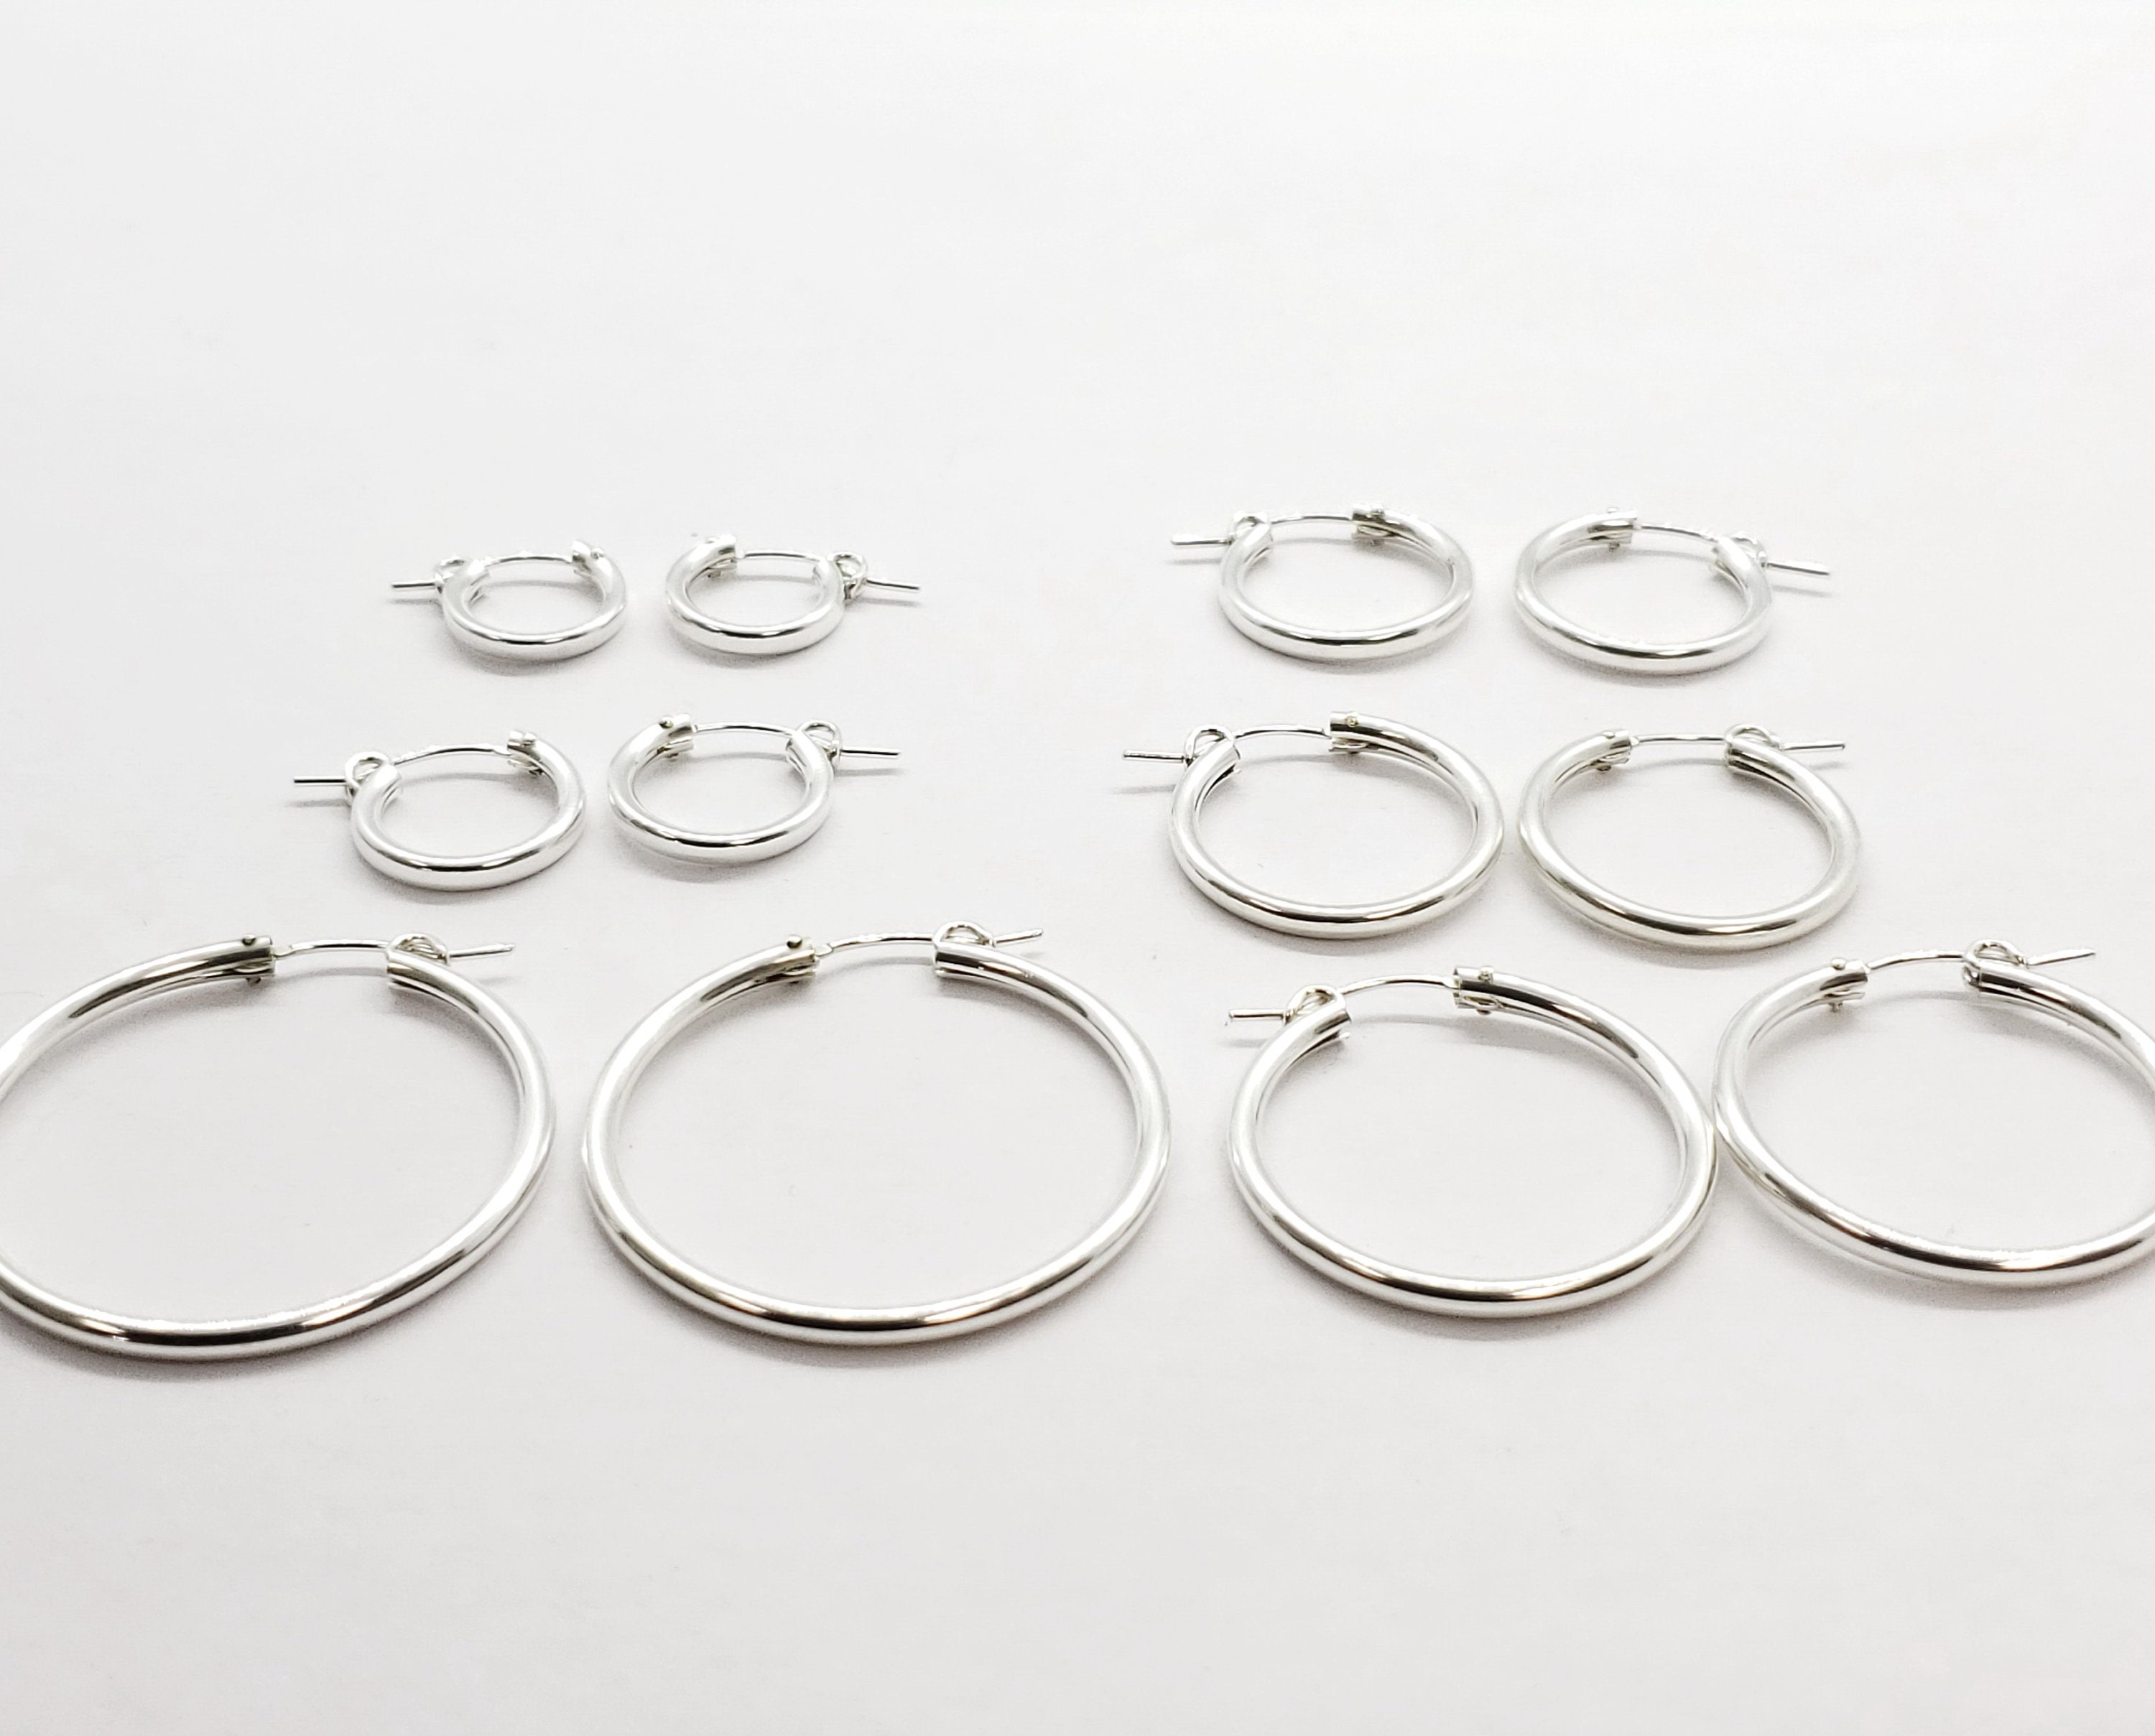 925 Sterling Silver Euro Wire, Lever-back Earring Hook With Loop, Leverback  Earrings Hook Findings, Solid Silver Earrings Making, EF1100 